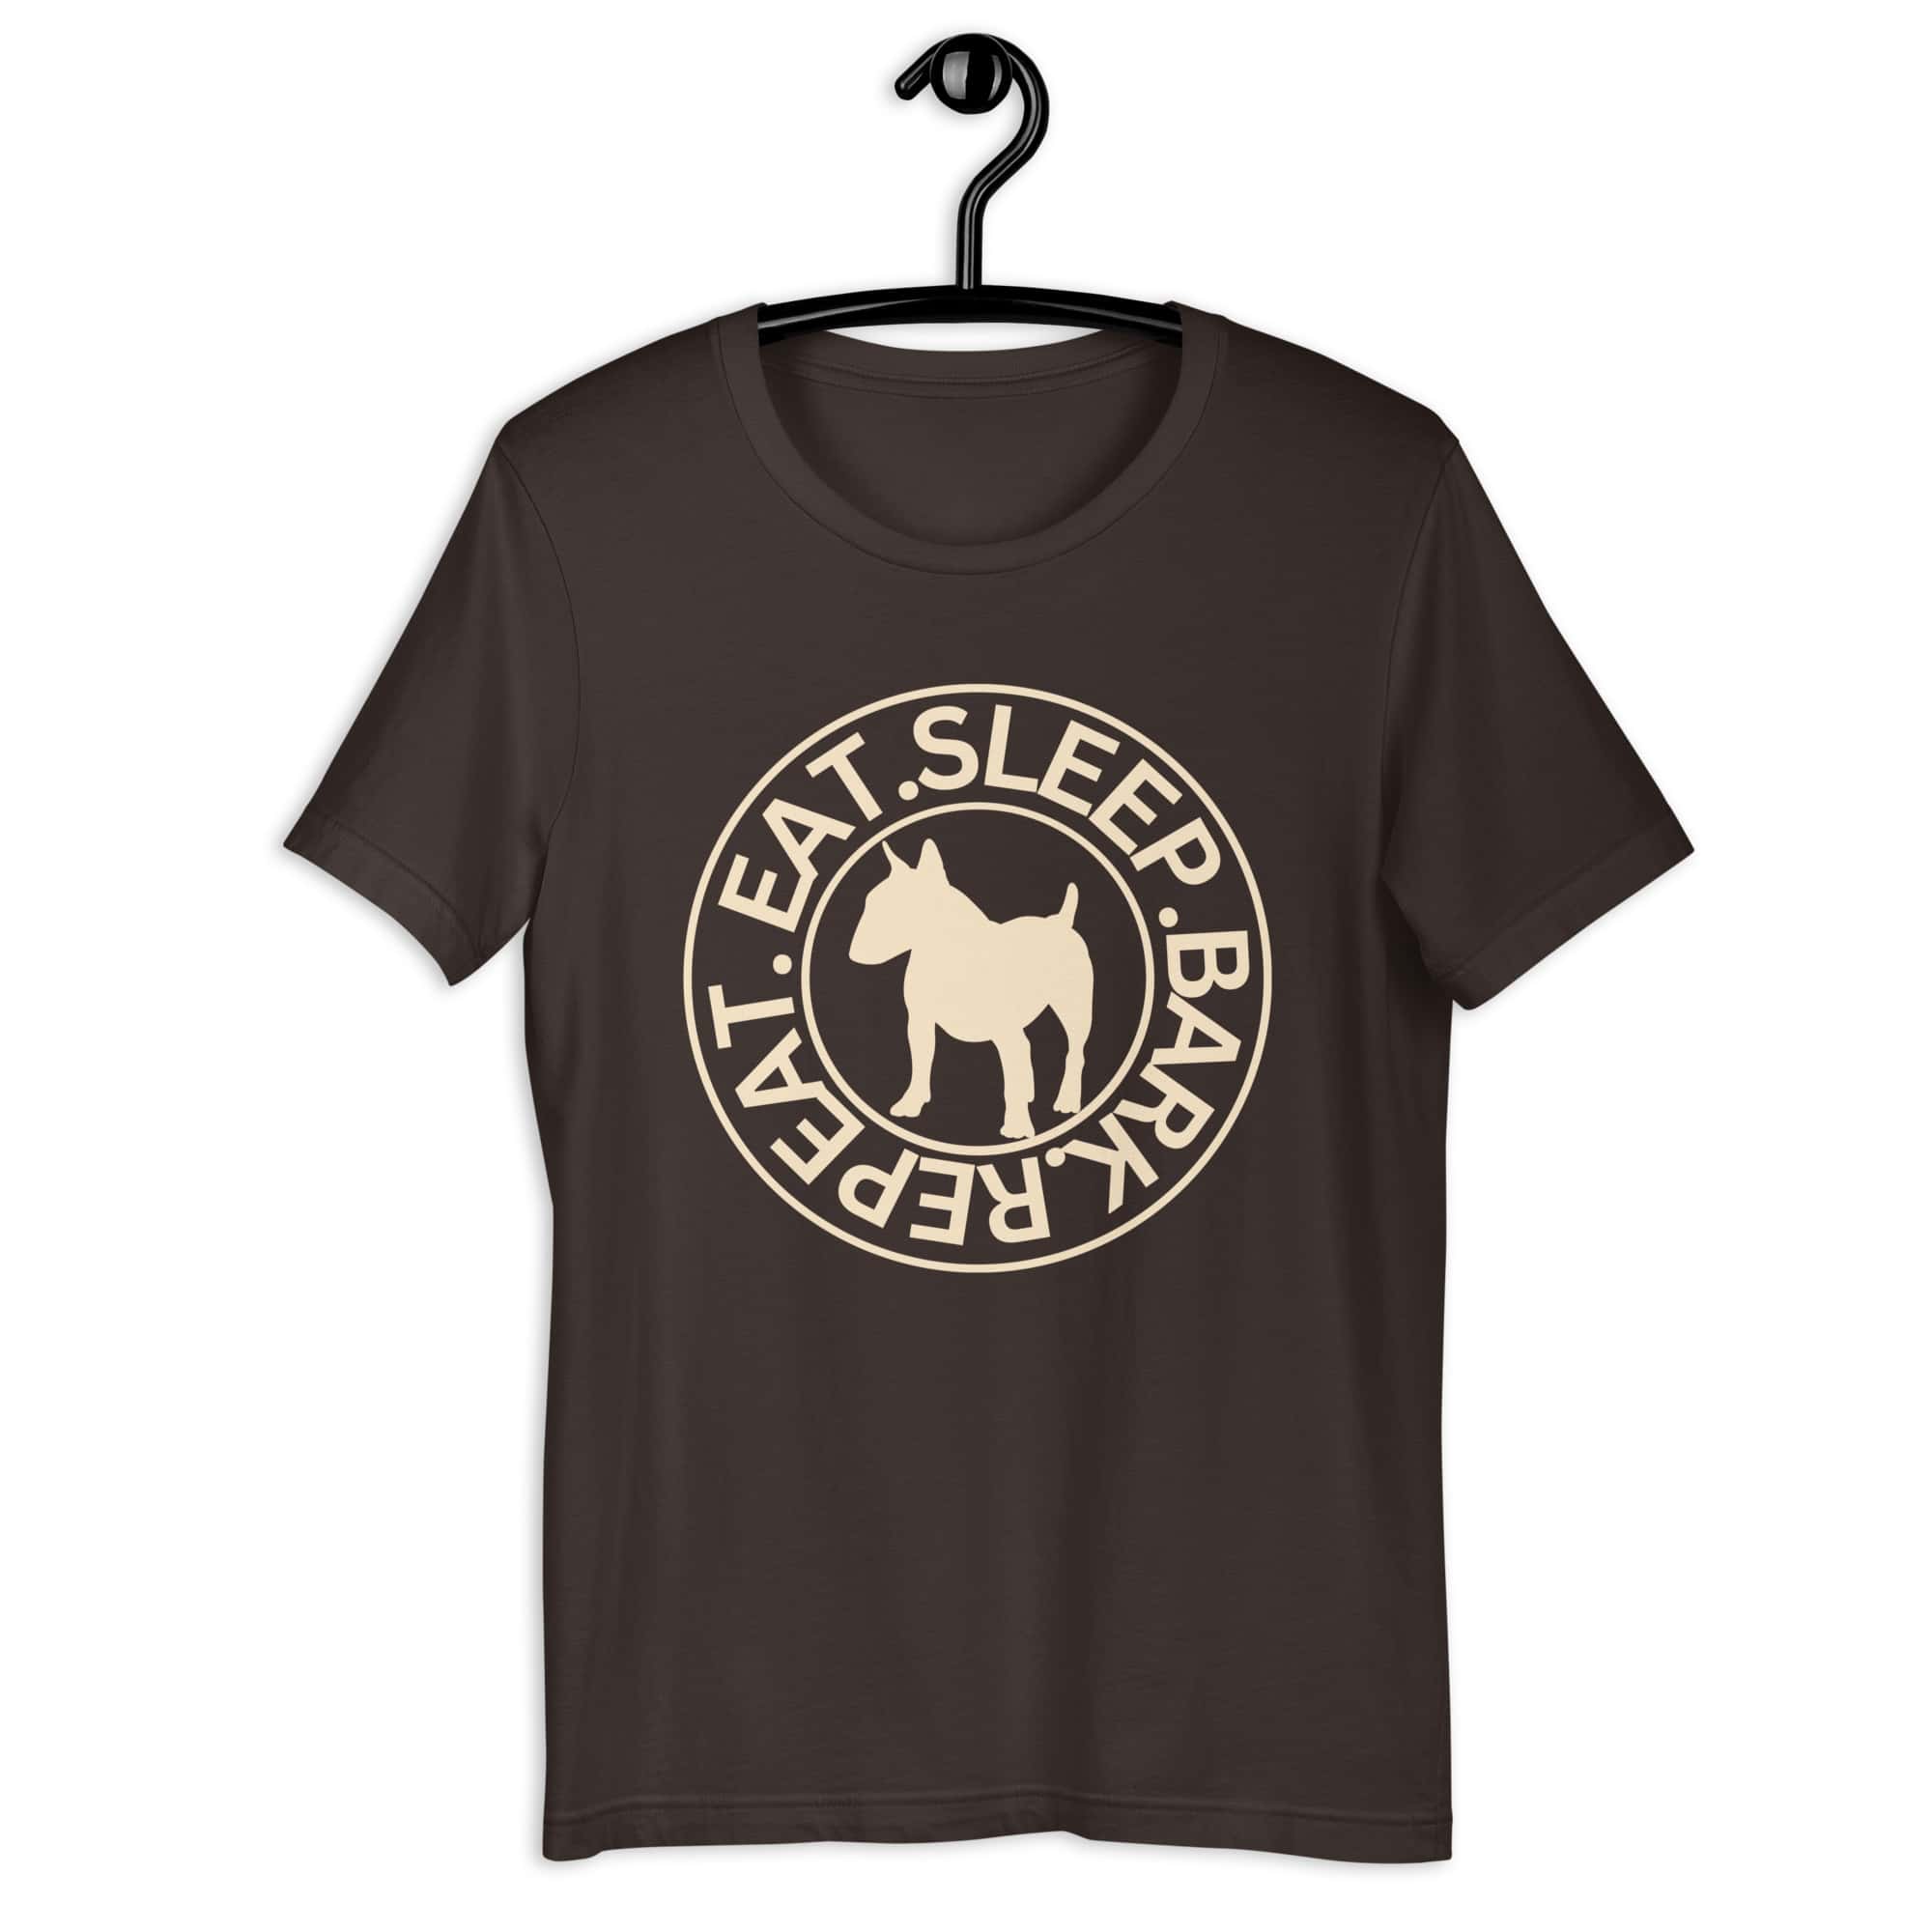 Eat Sleep Bark Repeat Bull Terrier Unisex T-Shirt. Brown